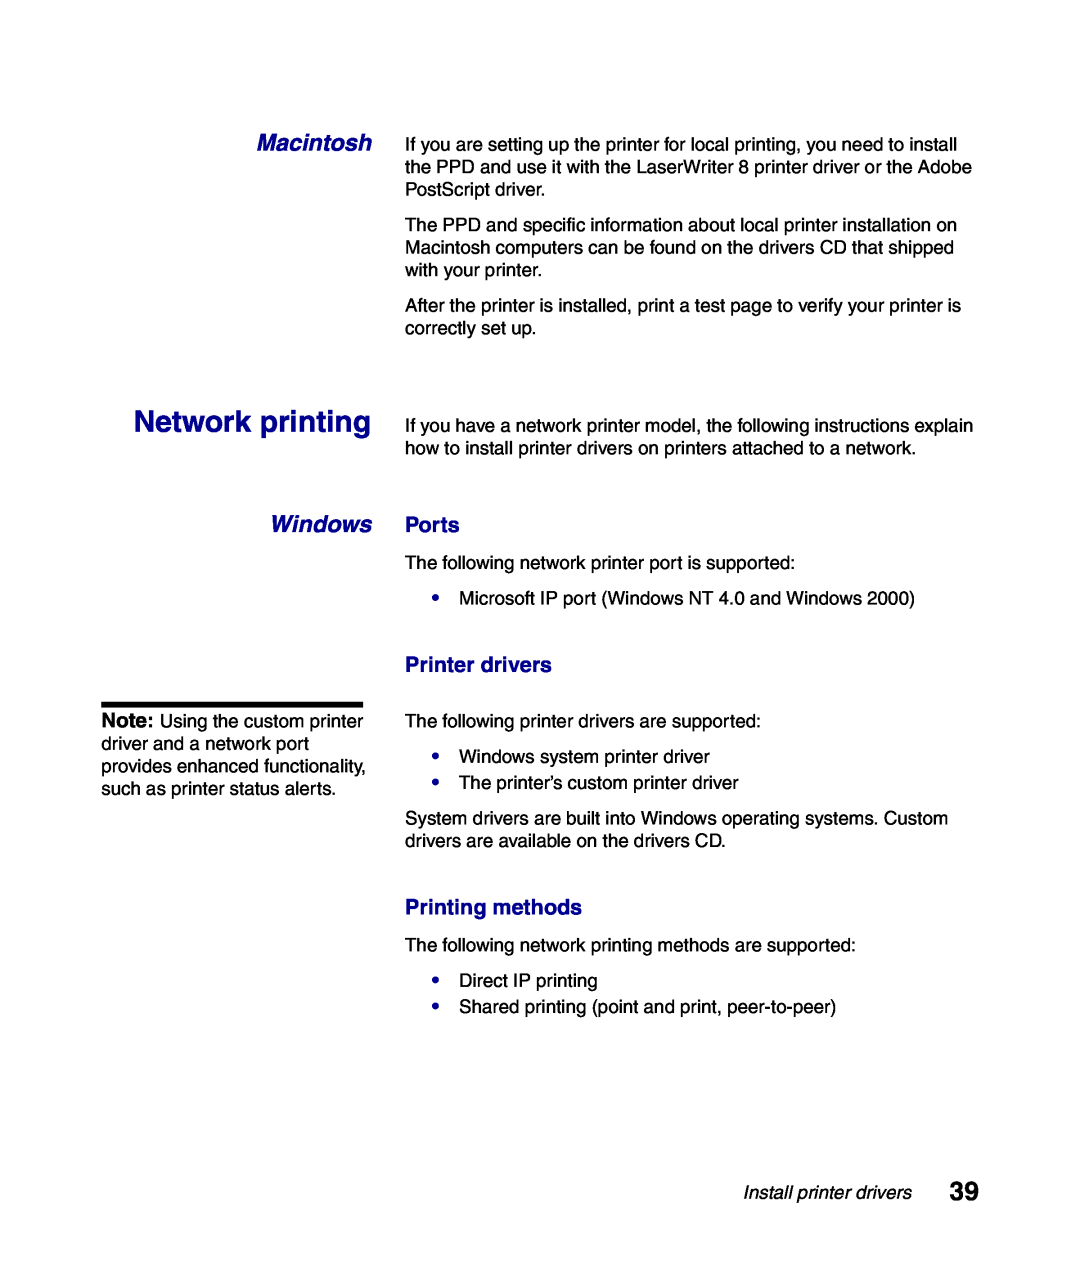 Lexmark Infoprint 1116 setup guide Network printing, Macintosh, Windows Ports, Printer drivers, Printing methods 